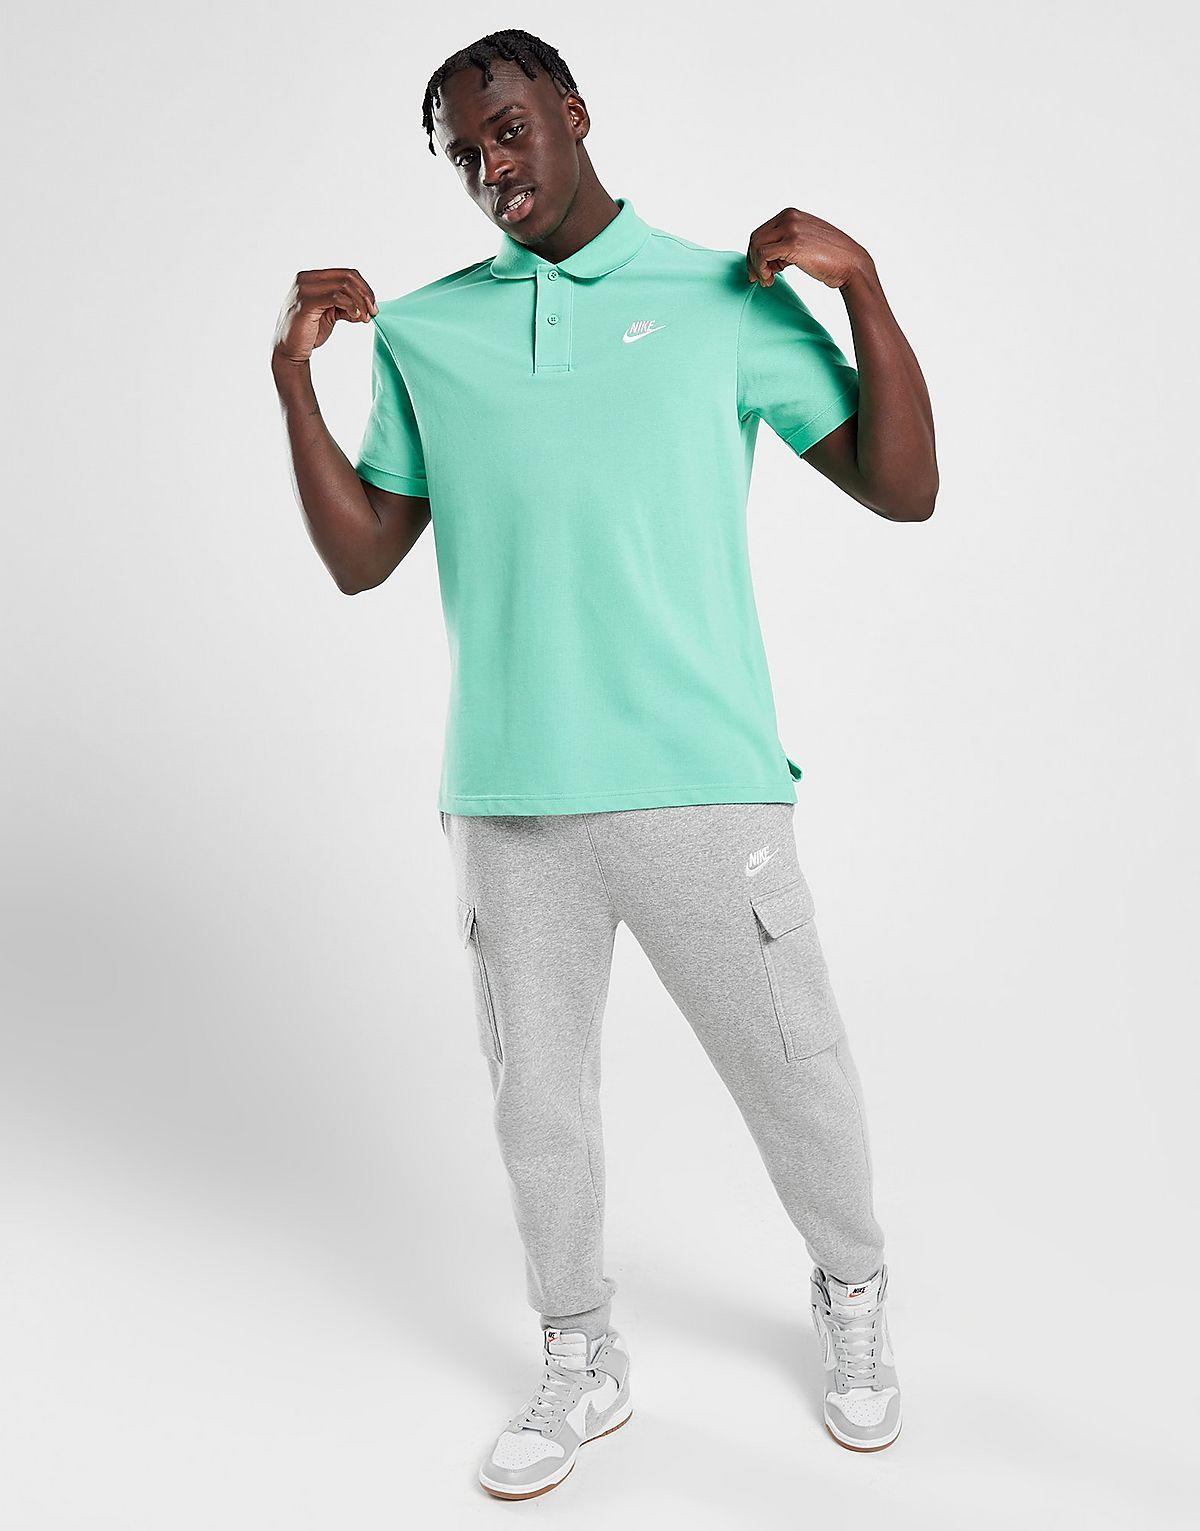 Nike Foundation Polo Shirt in for Men Lyst UK